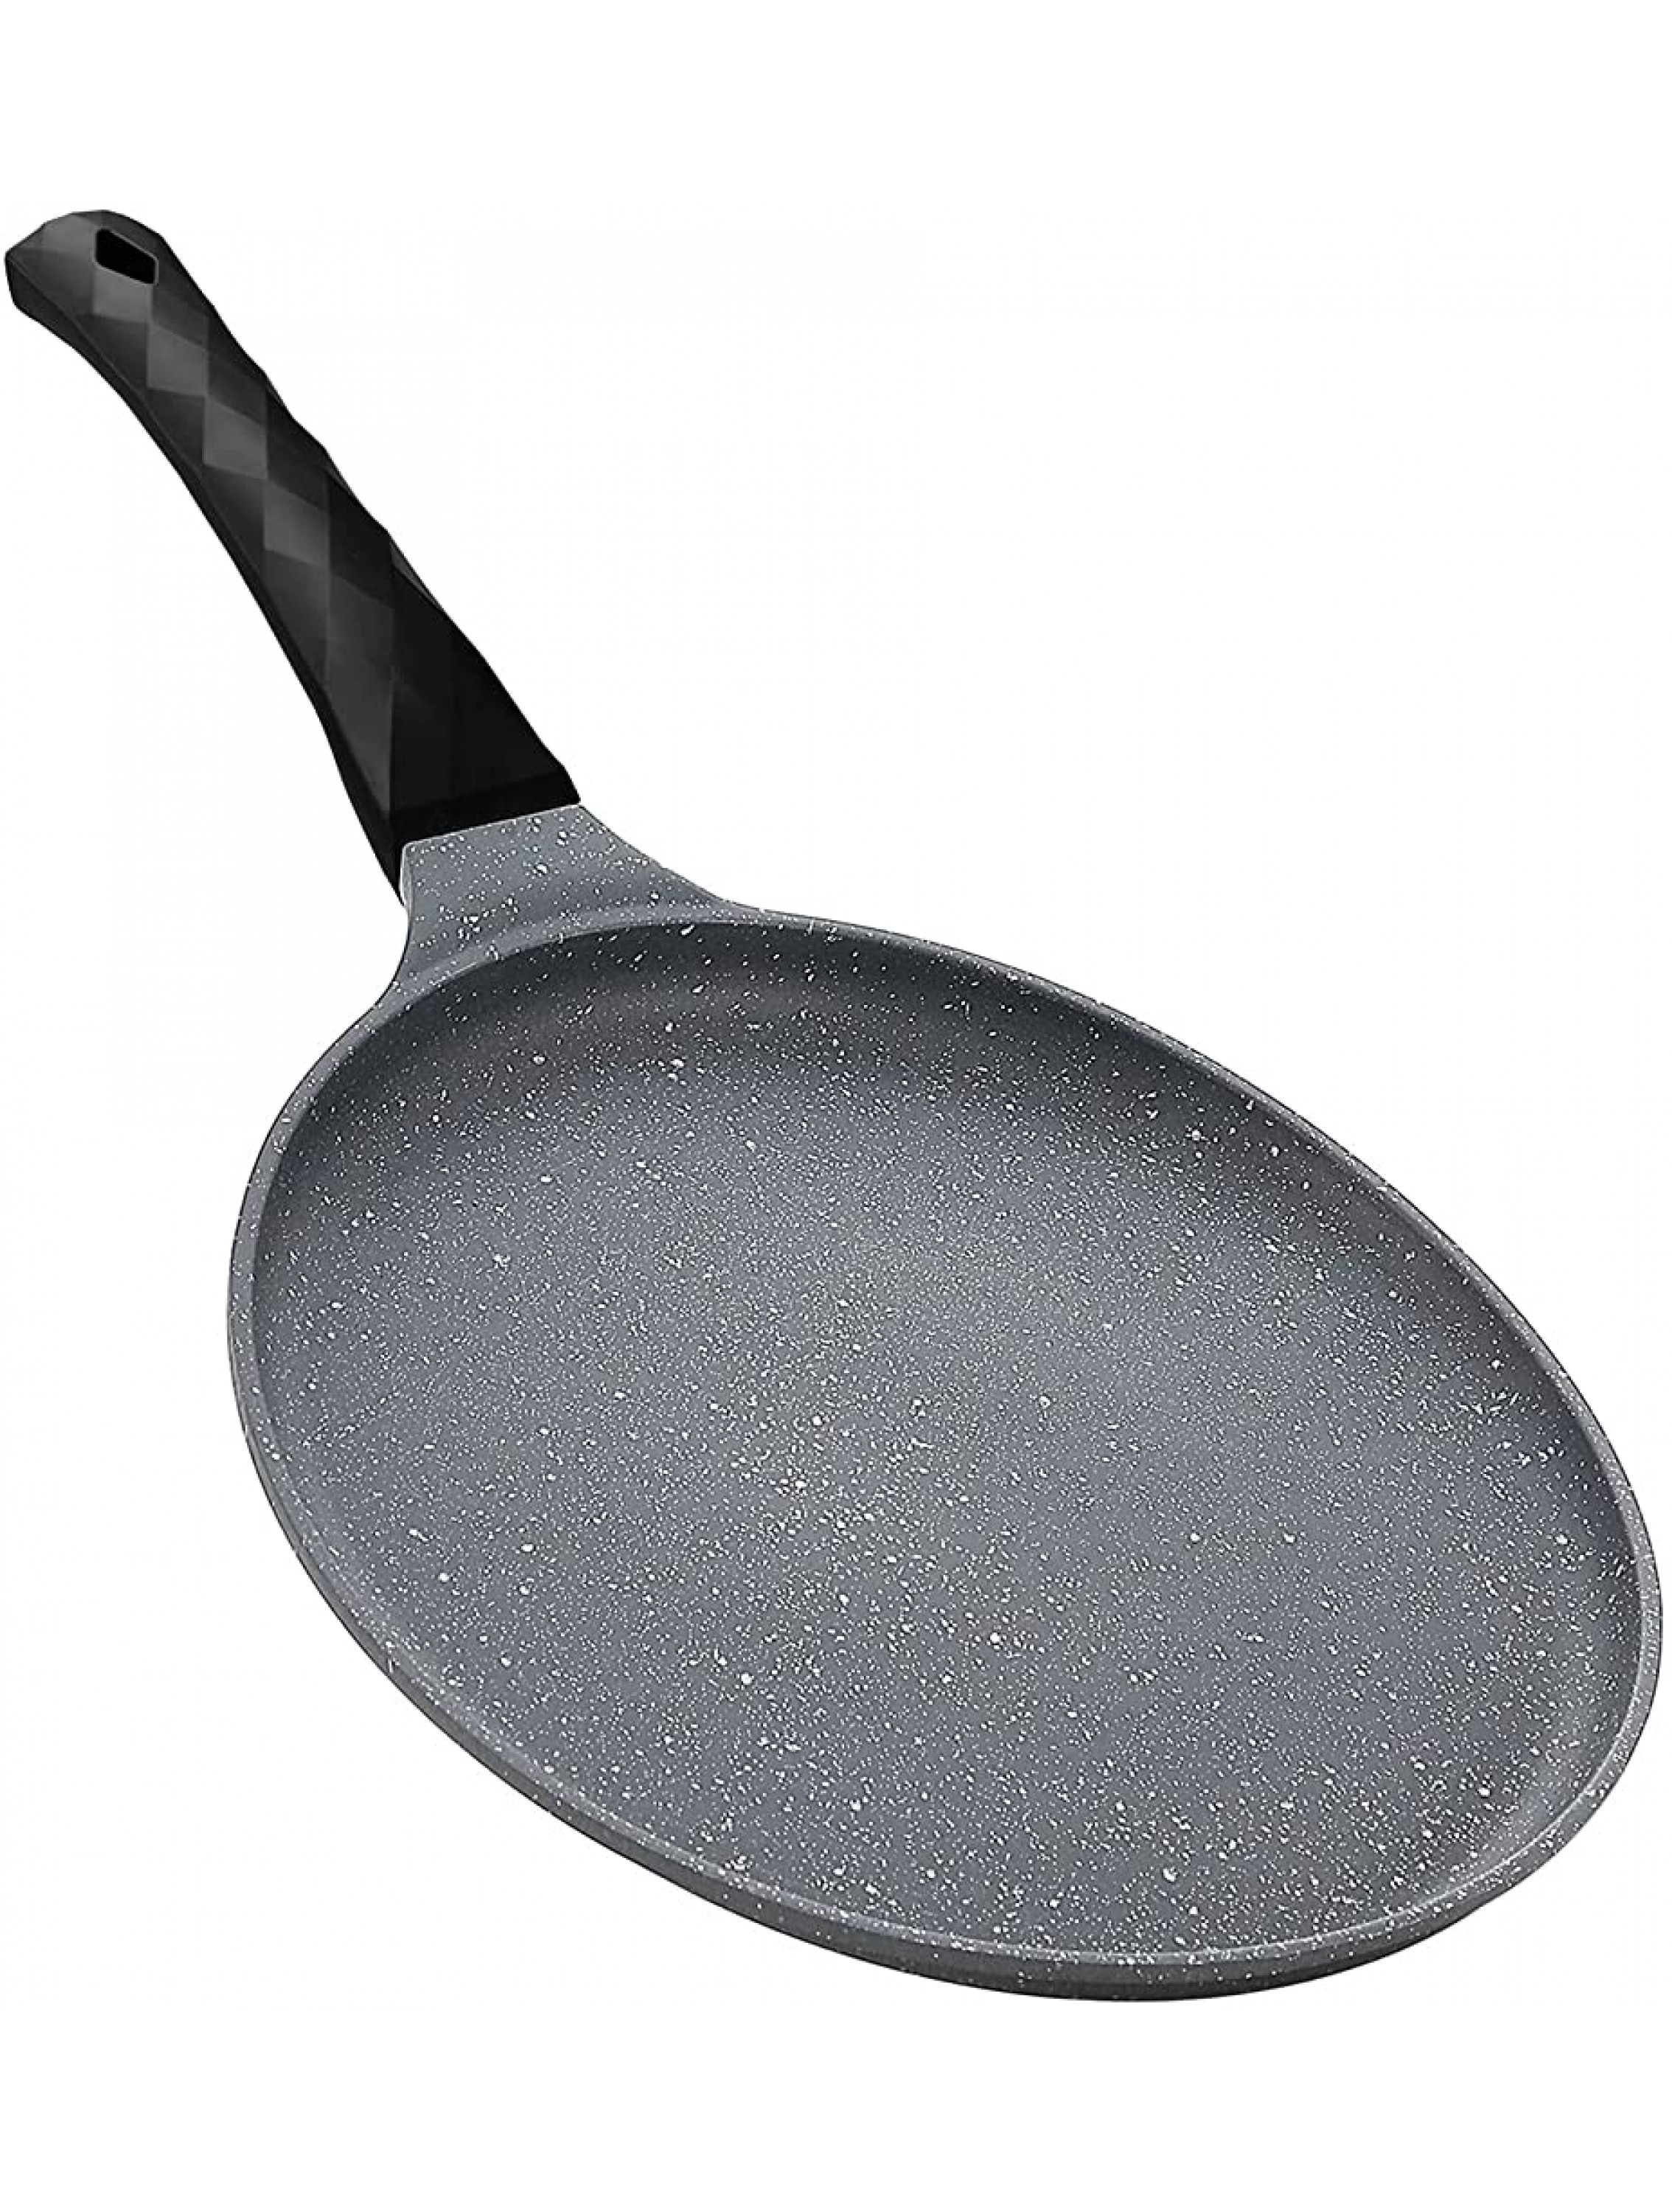 MIUGO Nonstick Crepe Pan,9.5 Inch Dosa Tawa,Tortilla Pan with Low pot edge and Detachable Handle,Induction compatible pancake pan - B7KYF3FYX